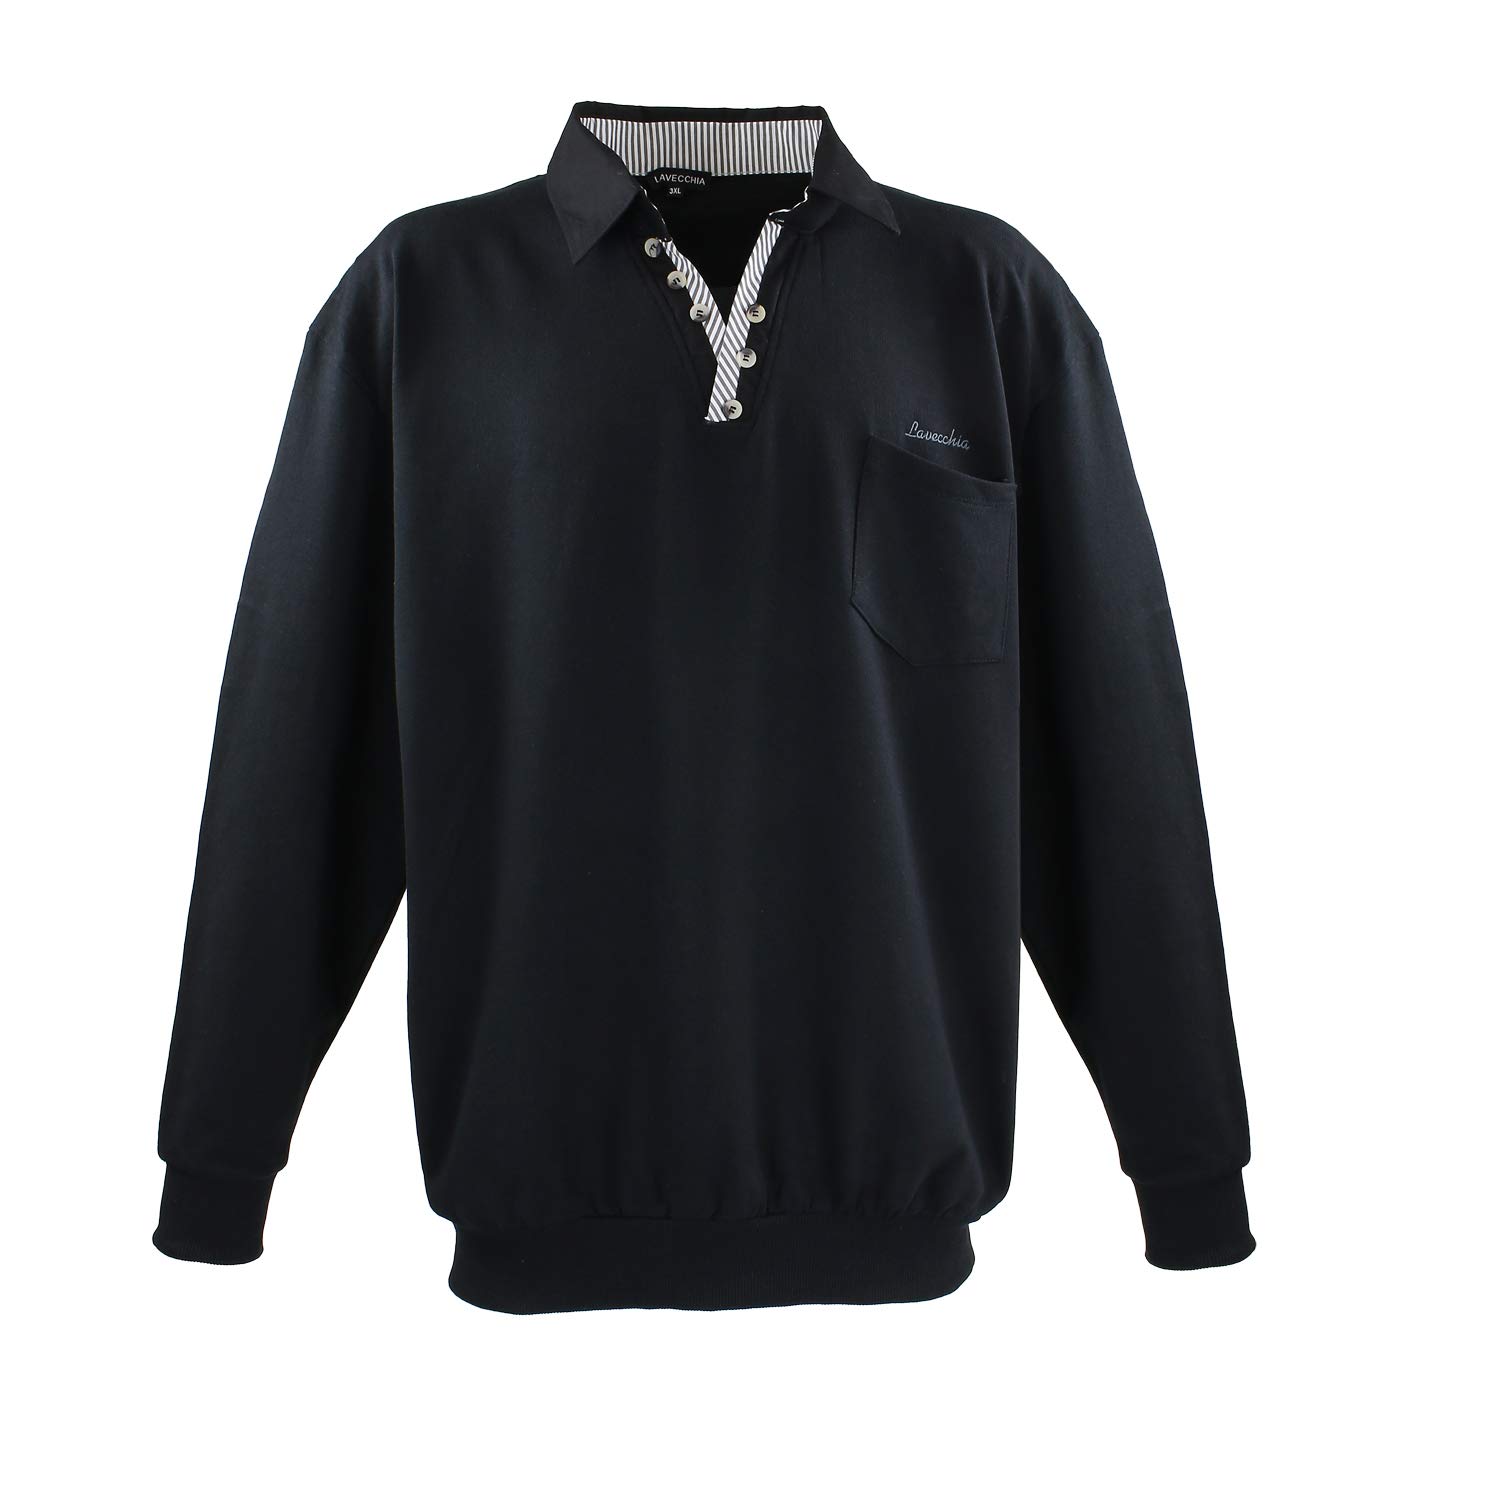 Lavecchia Übergrößen Sweatshirt Herren Langarmshirt Langarm Polo Shirt Poloshirt LV-602 (Schwarz, 7XL)